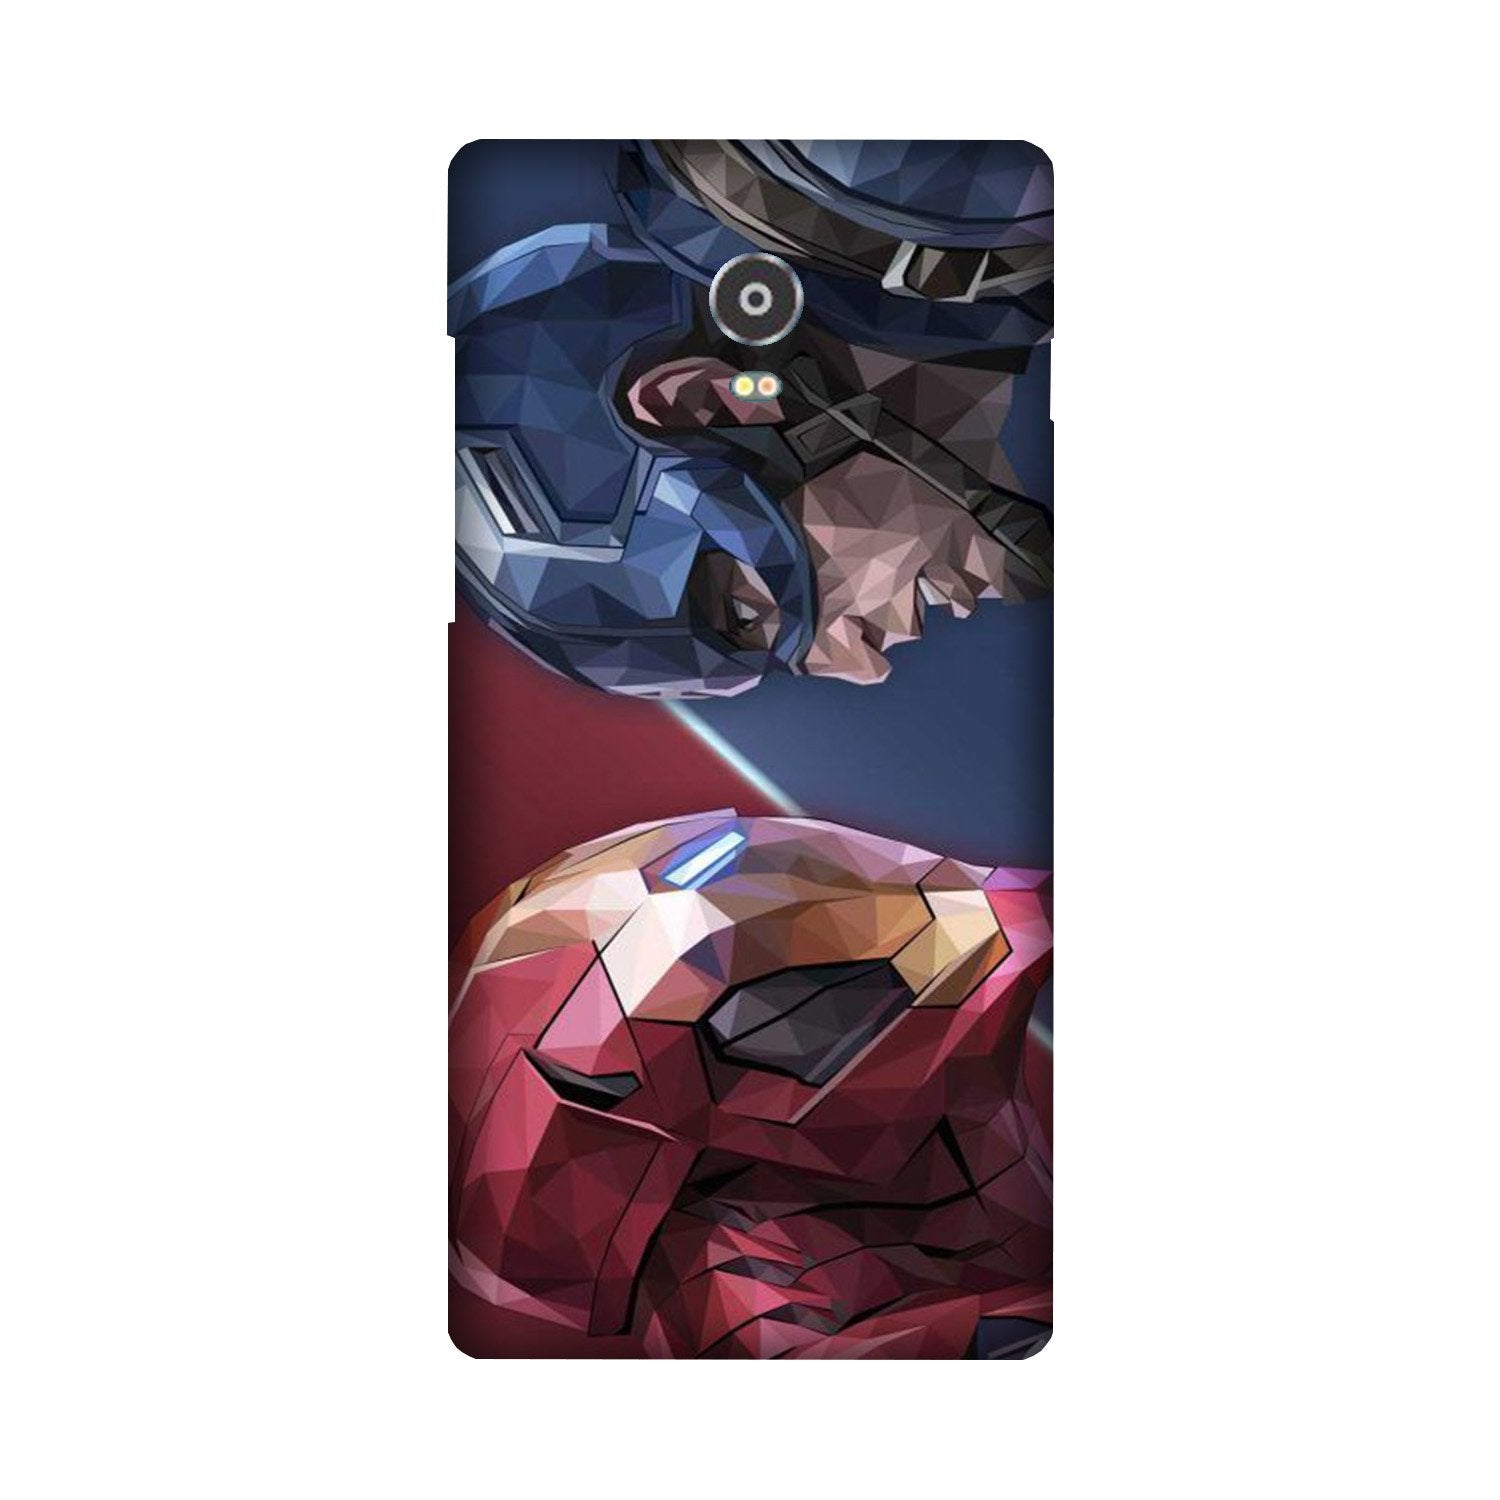 Ironman Captain America Case for Lenovo Vibe P1 (Design No. 245)